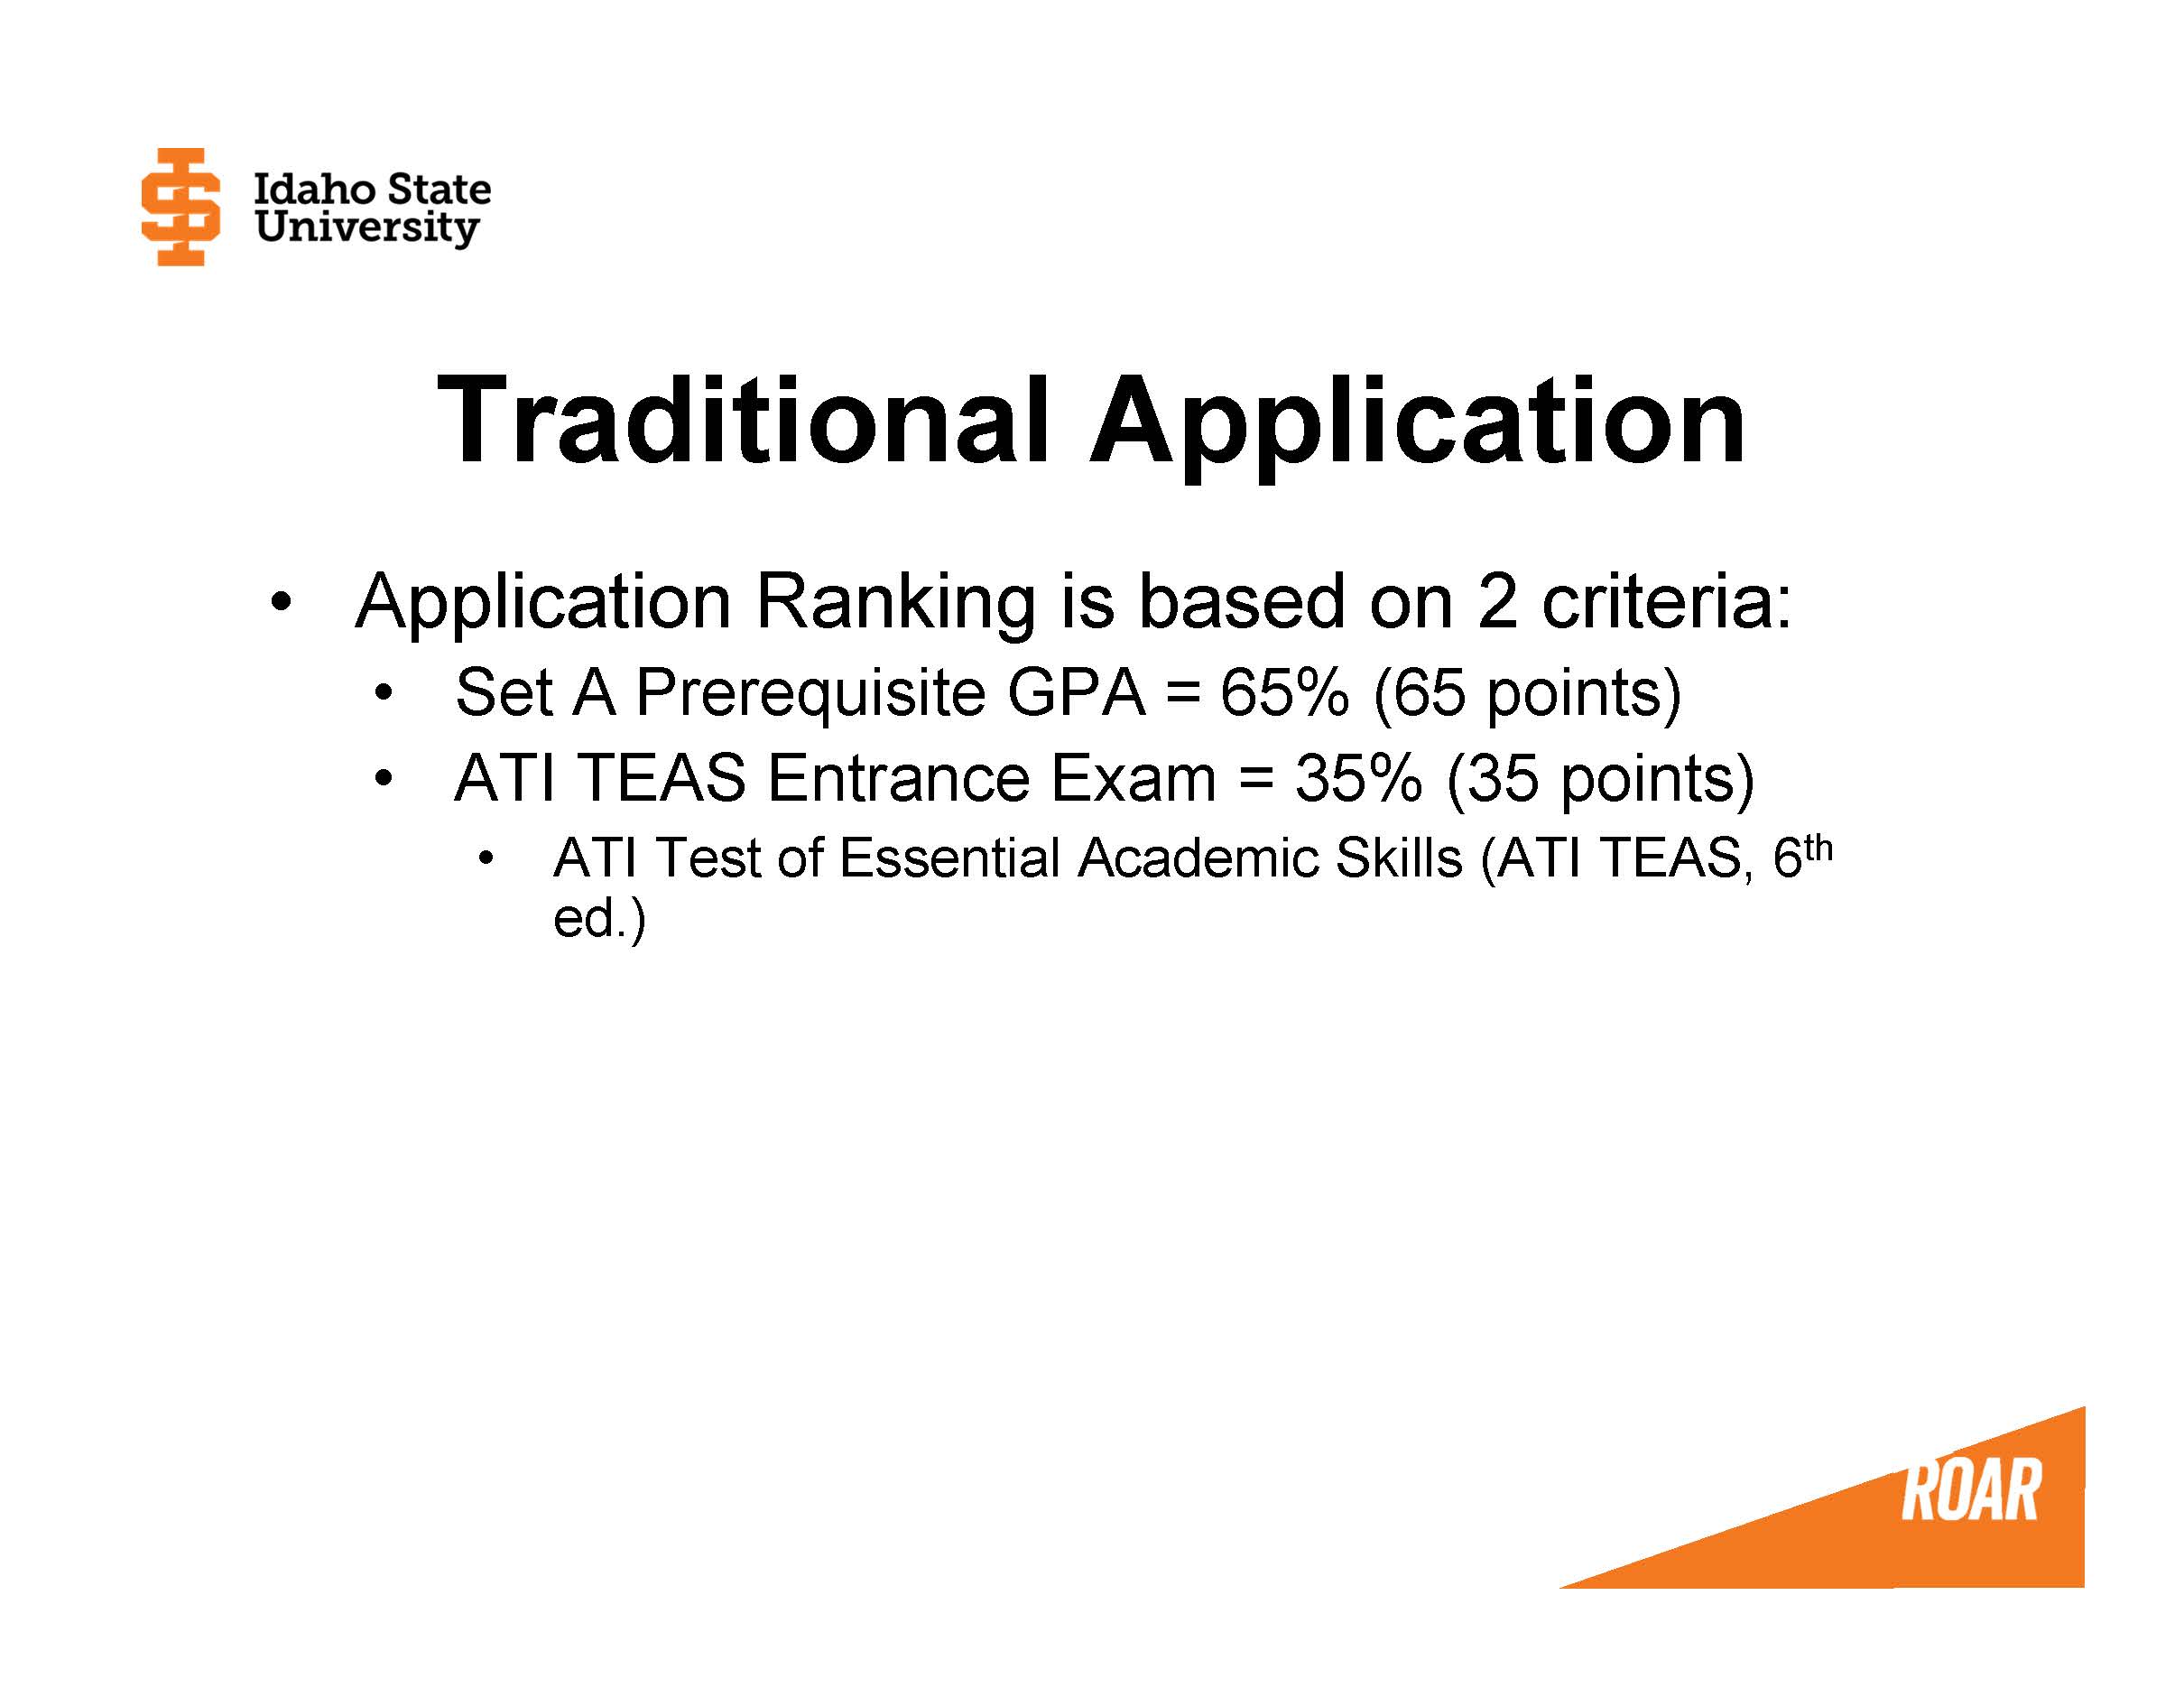 Application Ranking is based on 2 criteria: Set A Prerequisite GPA = 65% (65 points) ATI TEAS Entrance Exam = 35% (35 points) ATI Test of Essential Academic Skills (ATI TEAS, 6th ed.)